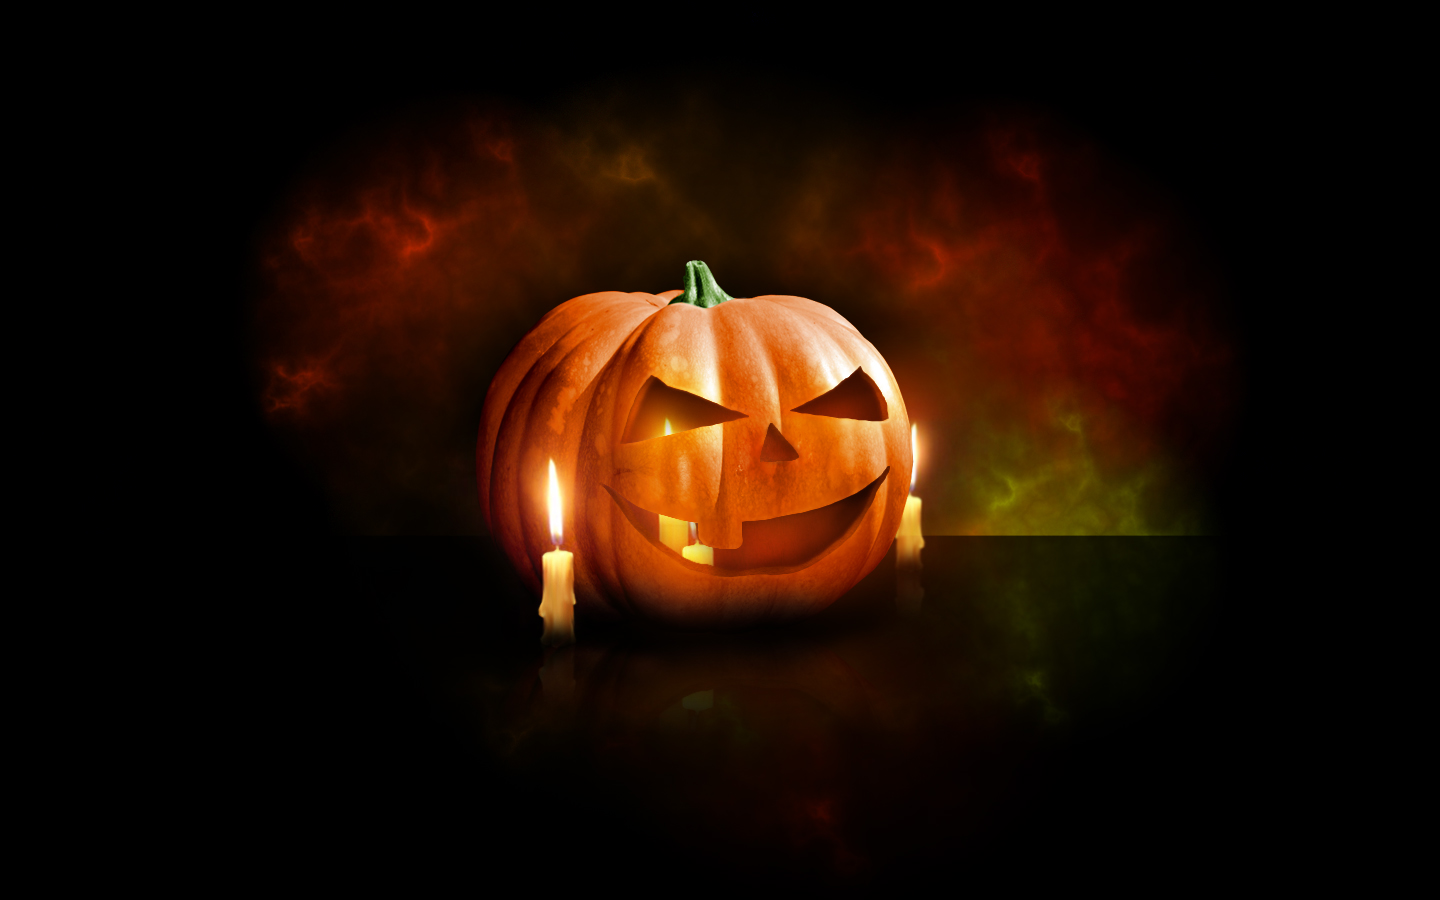 Design A Halloween Pumpkin Wallpaper In Photoshop Tuts